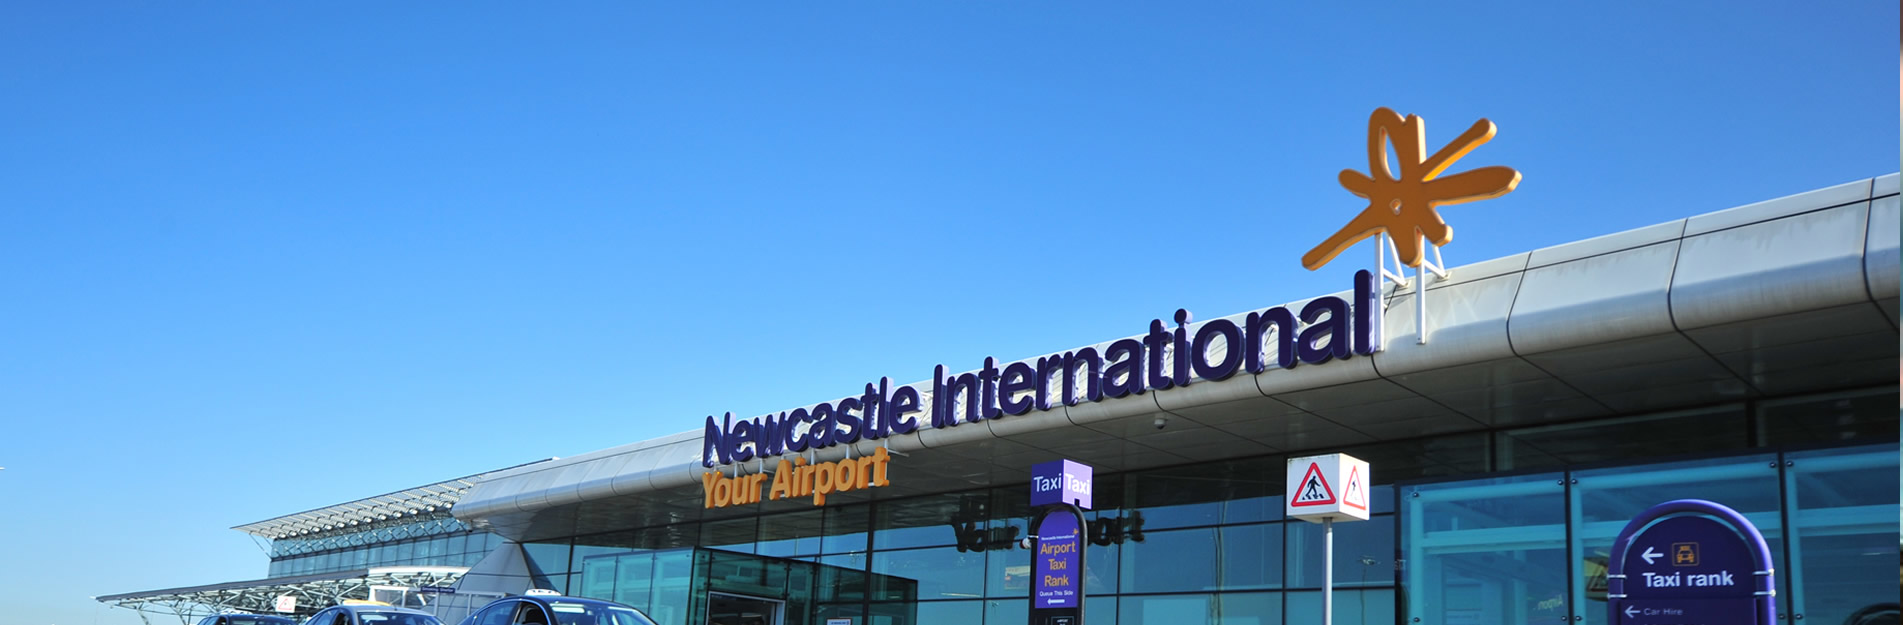 Newcastle International Airport Refinances Bank Facilities